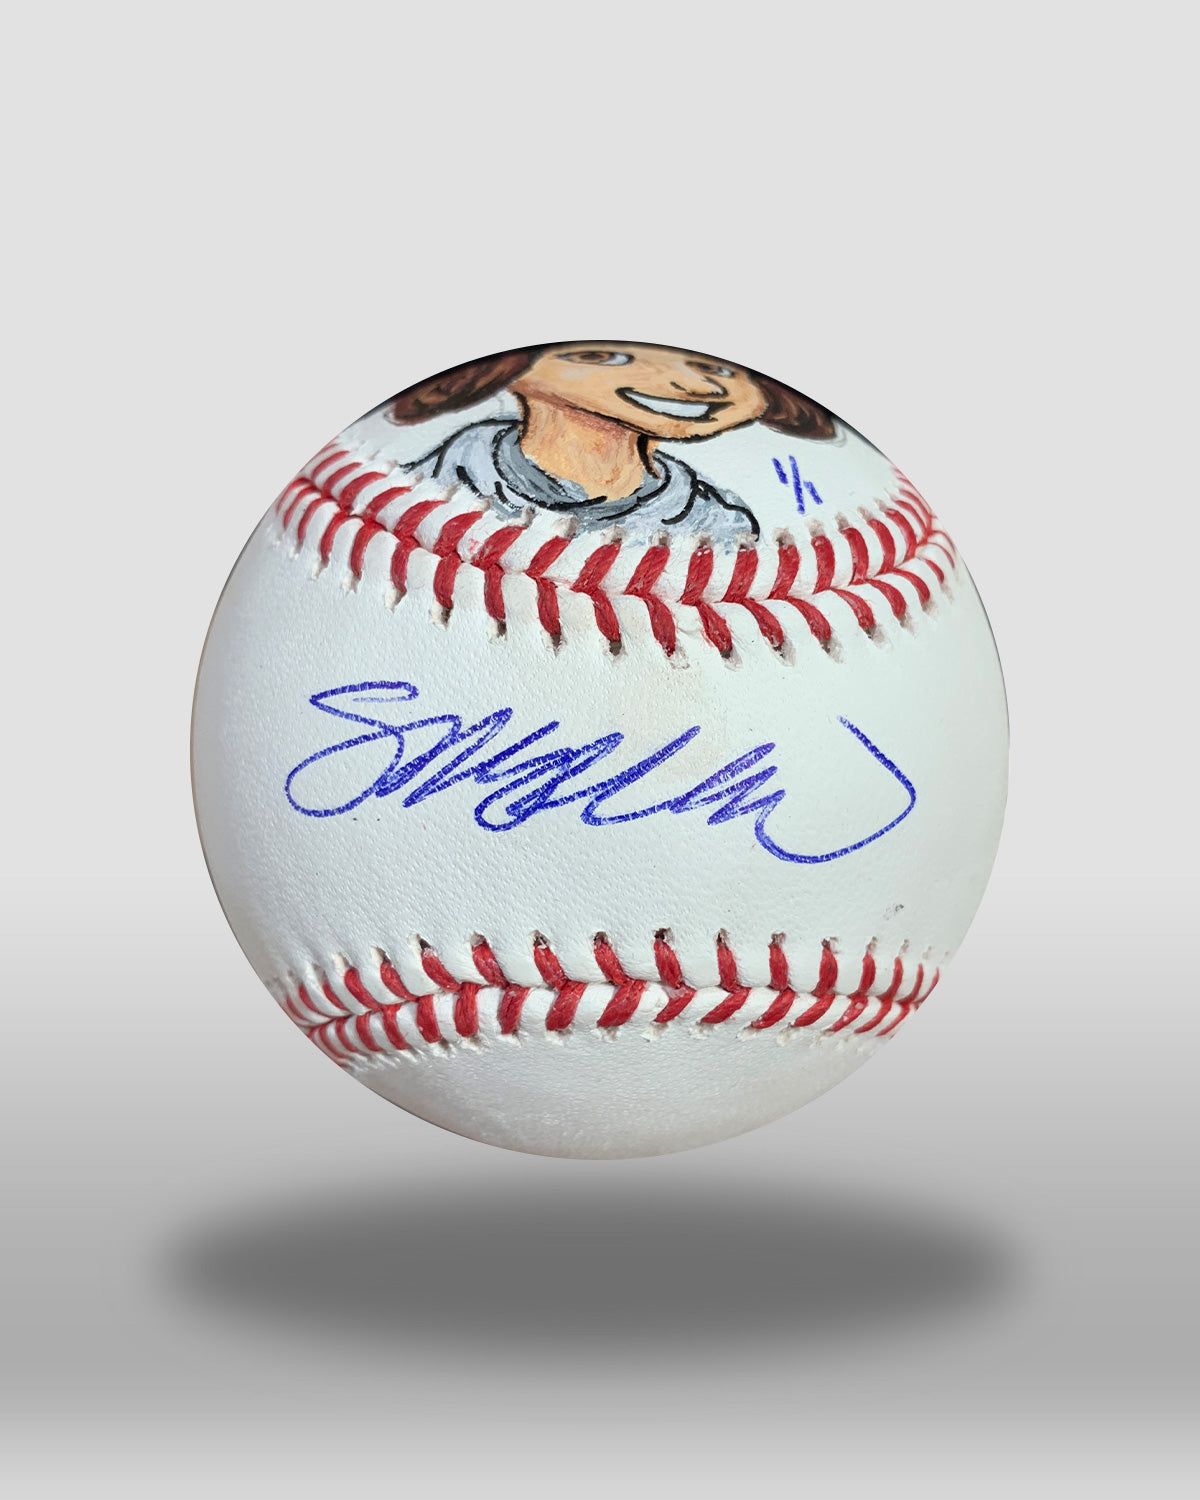 Ballpark Princess Leia Hand-Drawn Baseball Art